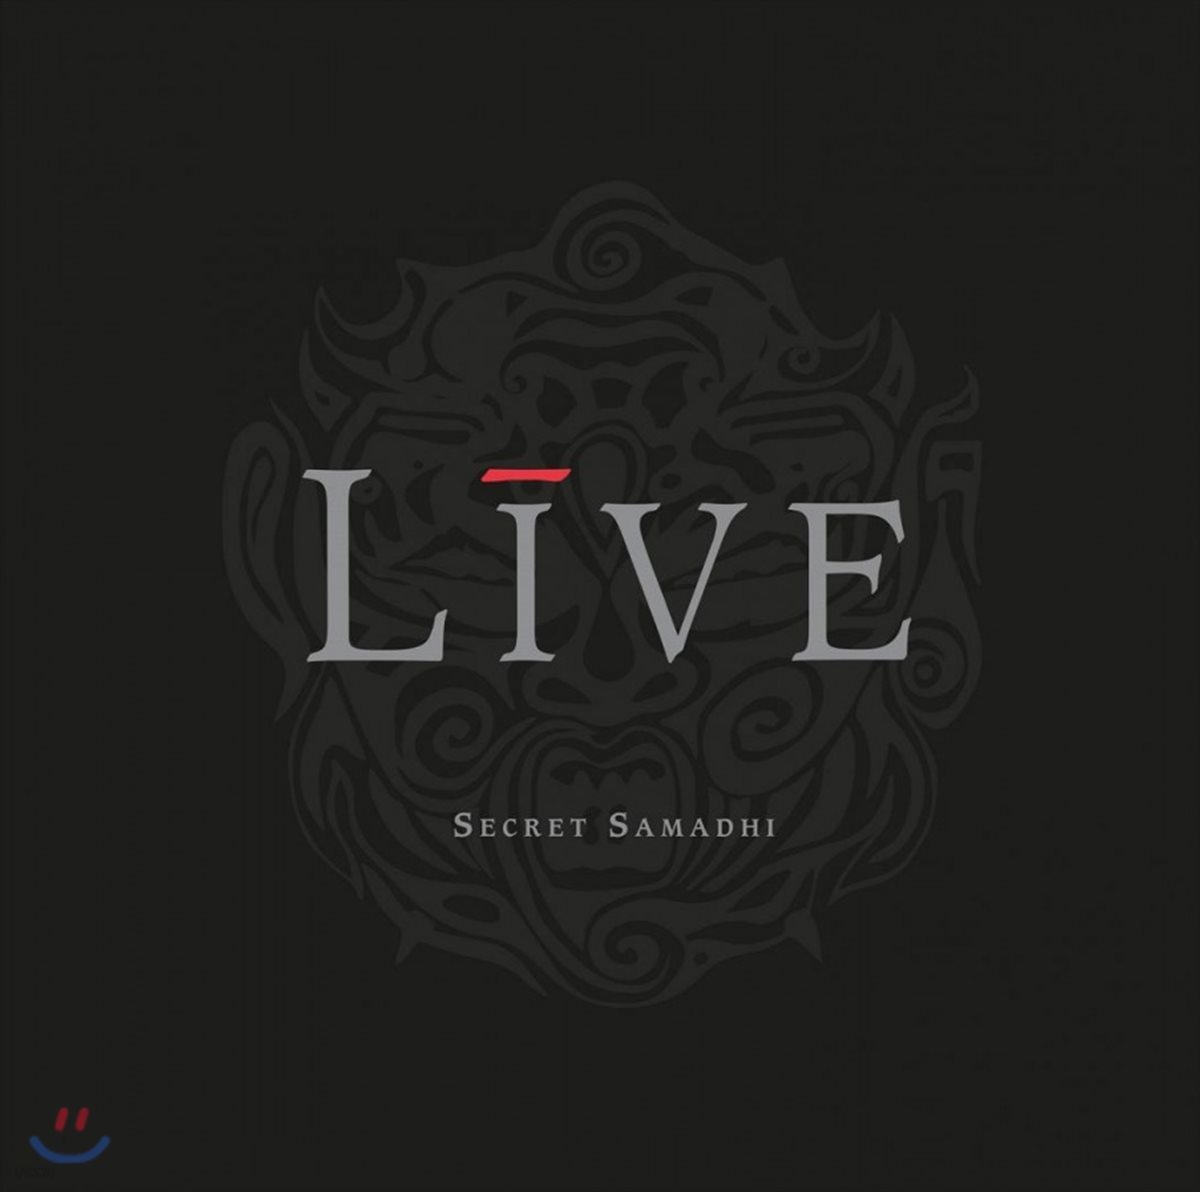 Live (라이브) - Secret Samadhi 발매 20주년 기념반 [2LP]